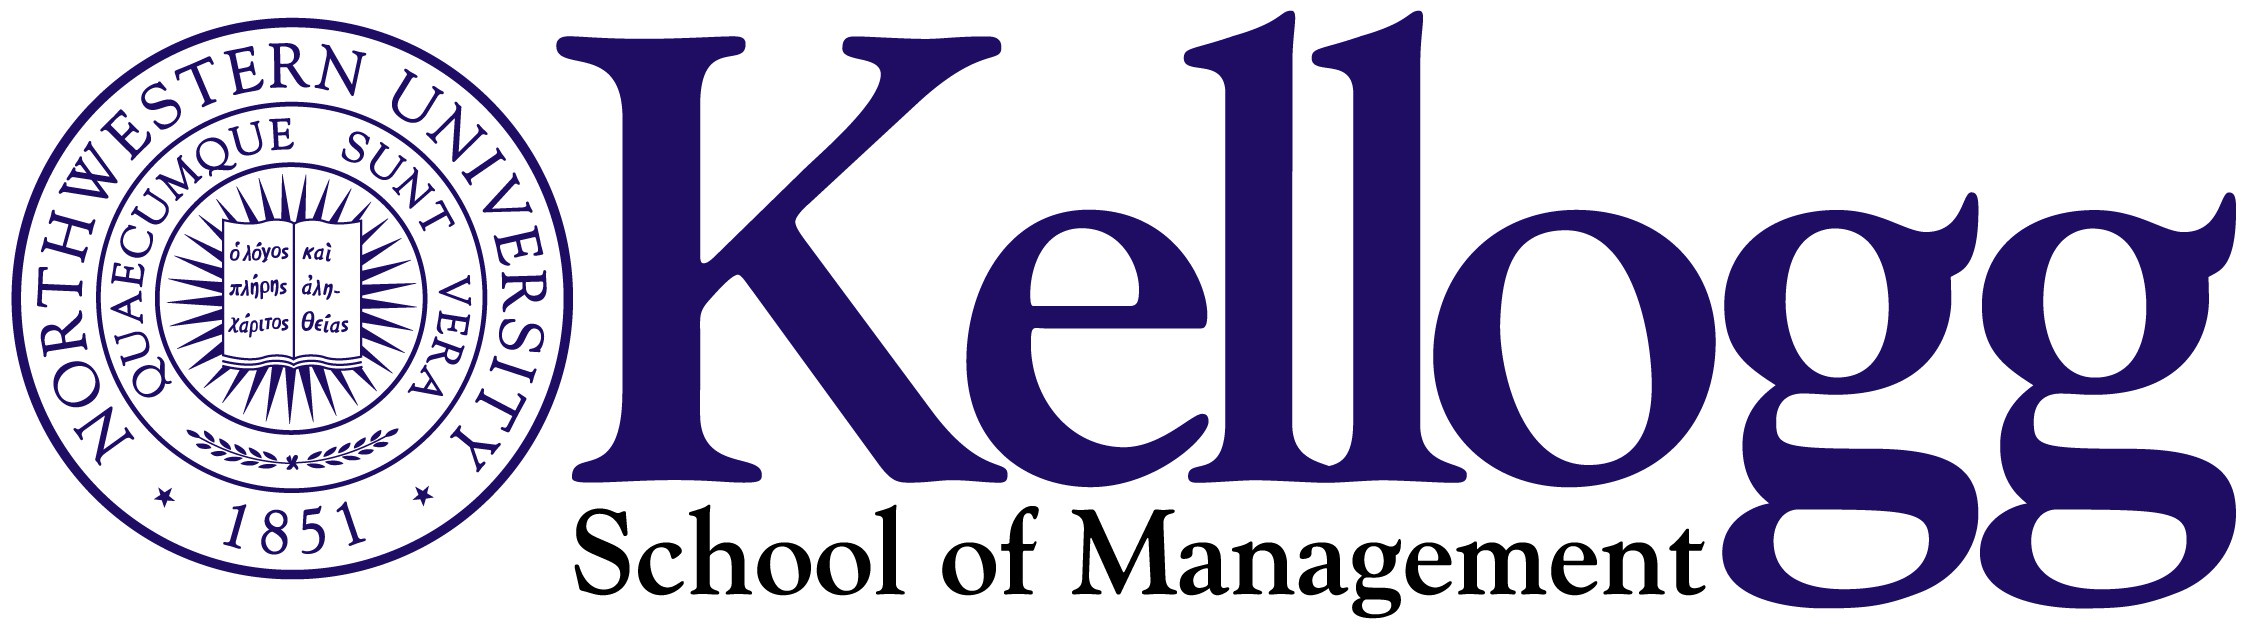 Northwestern-University-Kellogg-School-of-Management-Logo.jpg